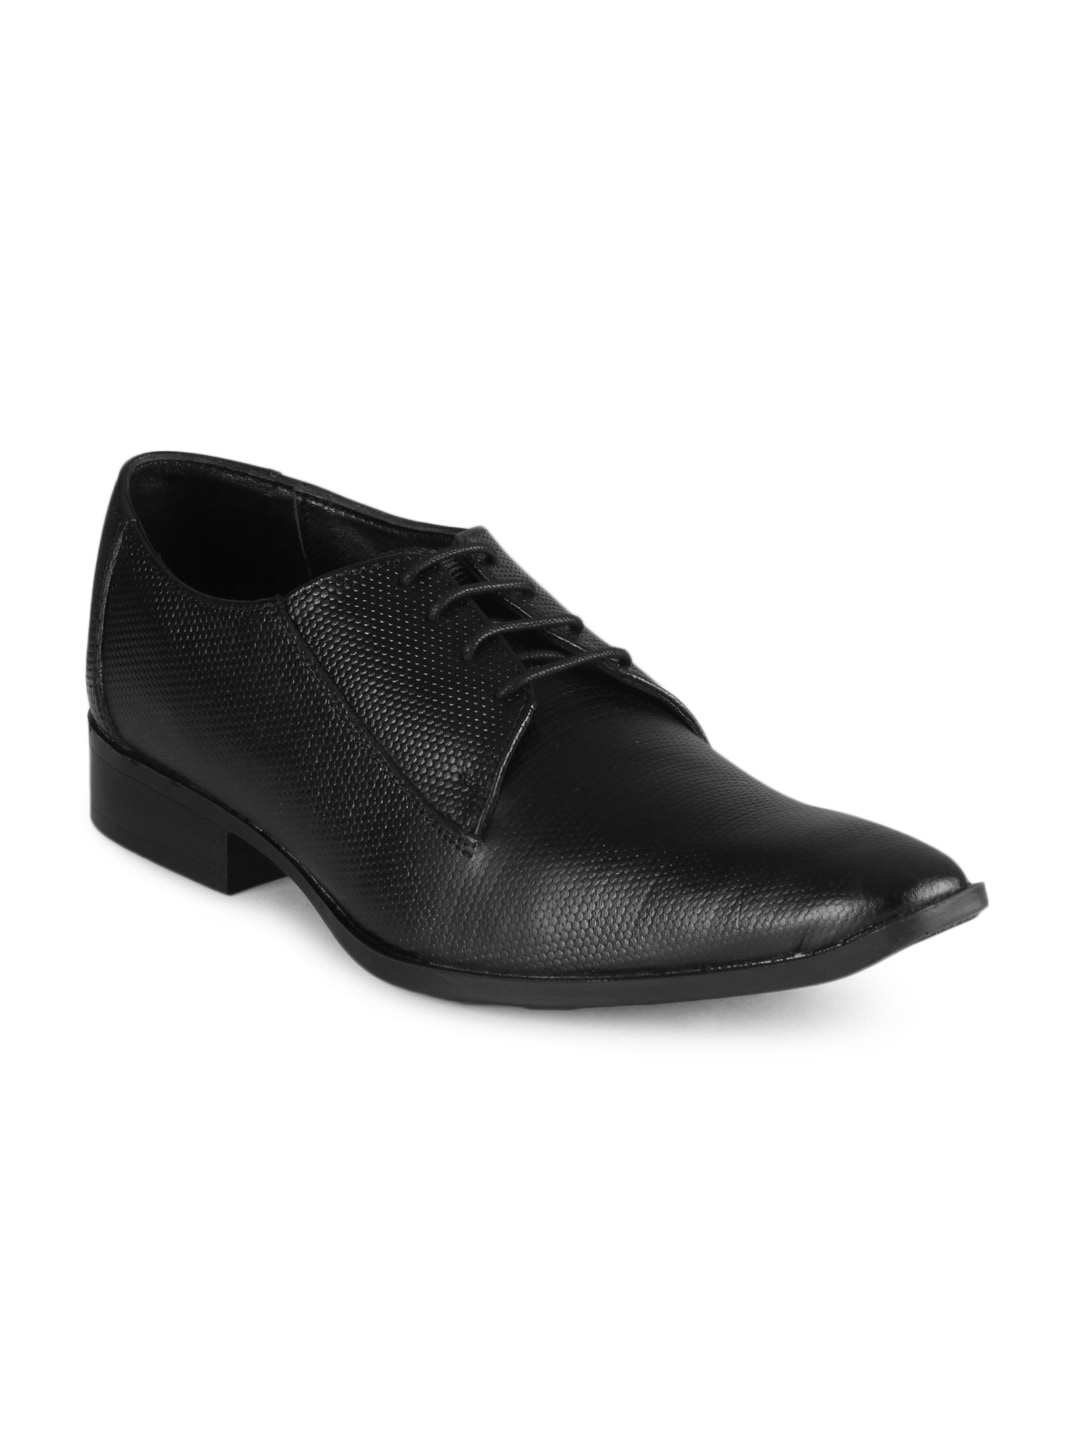 Franco Leone Men Black Slip On Formal Shoes